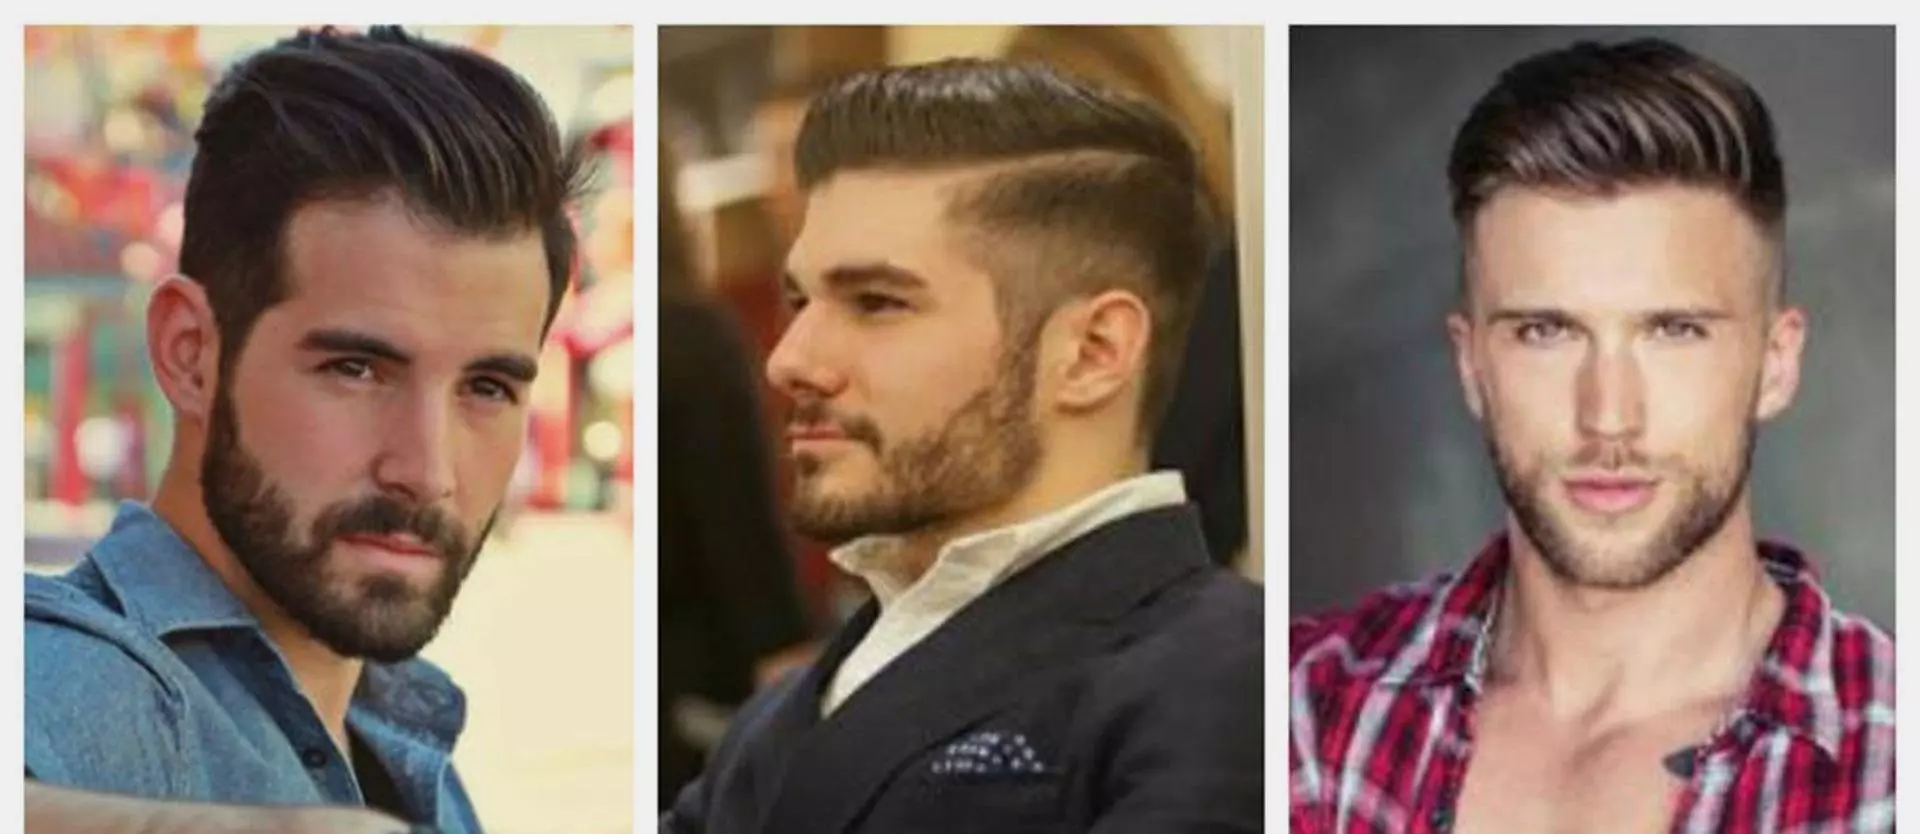 Men with classic undercut hair style